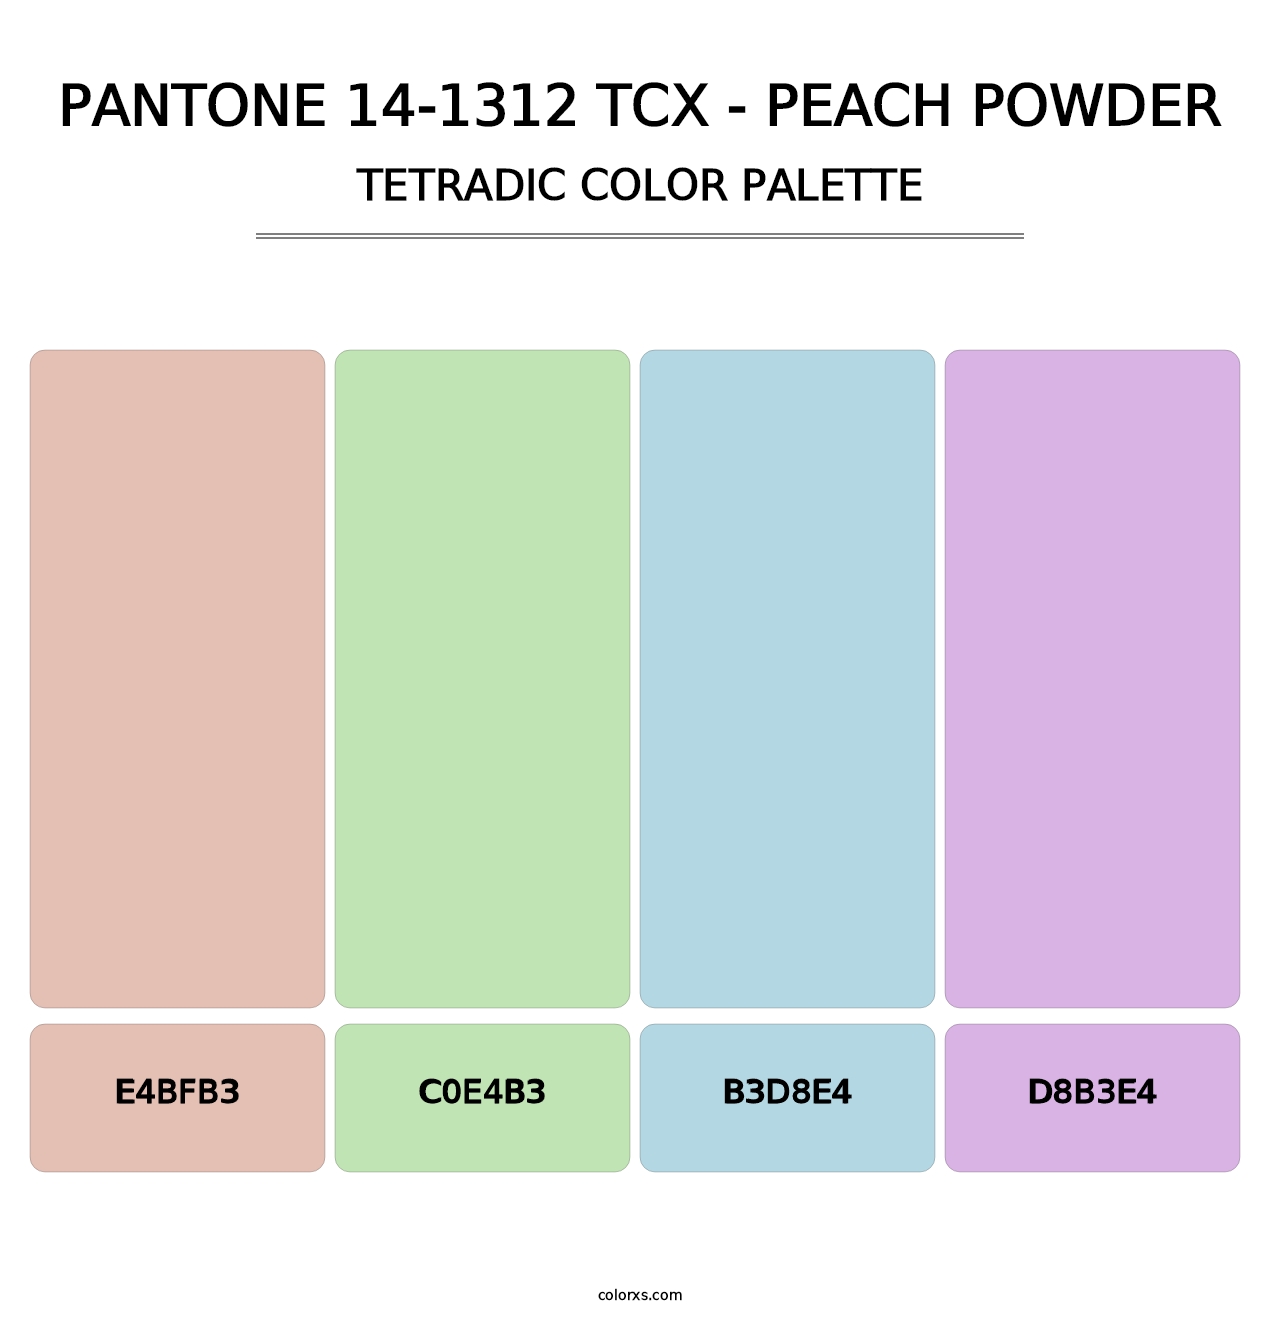 PANTONE 14-1312 TCX - Peach Powder - Tetradic Color Palette